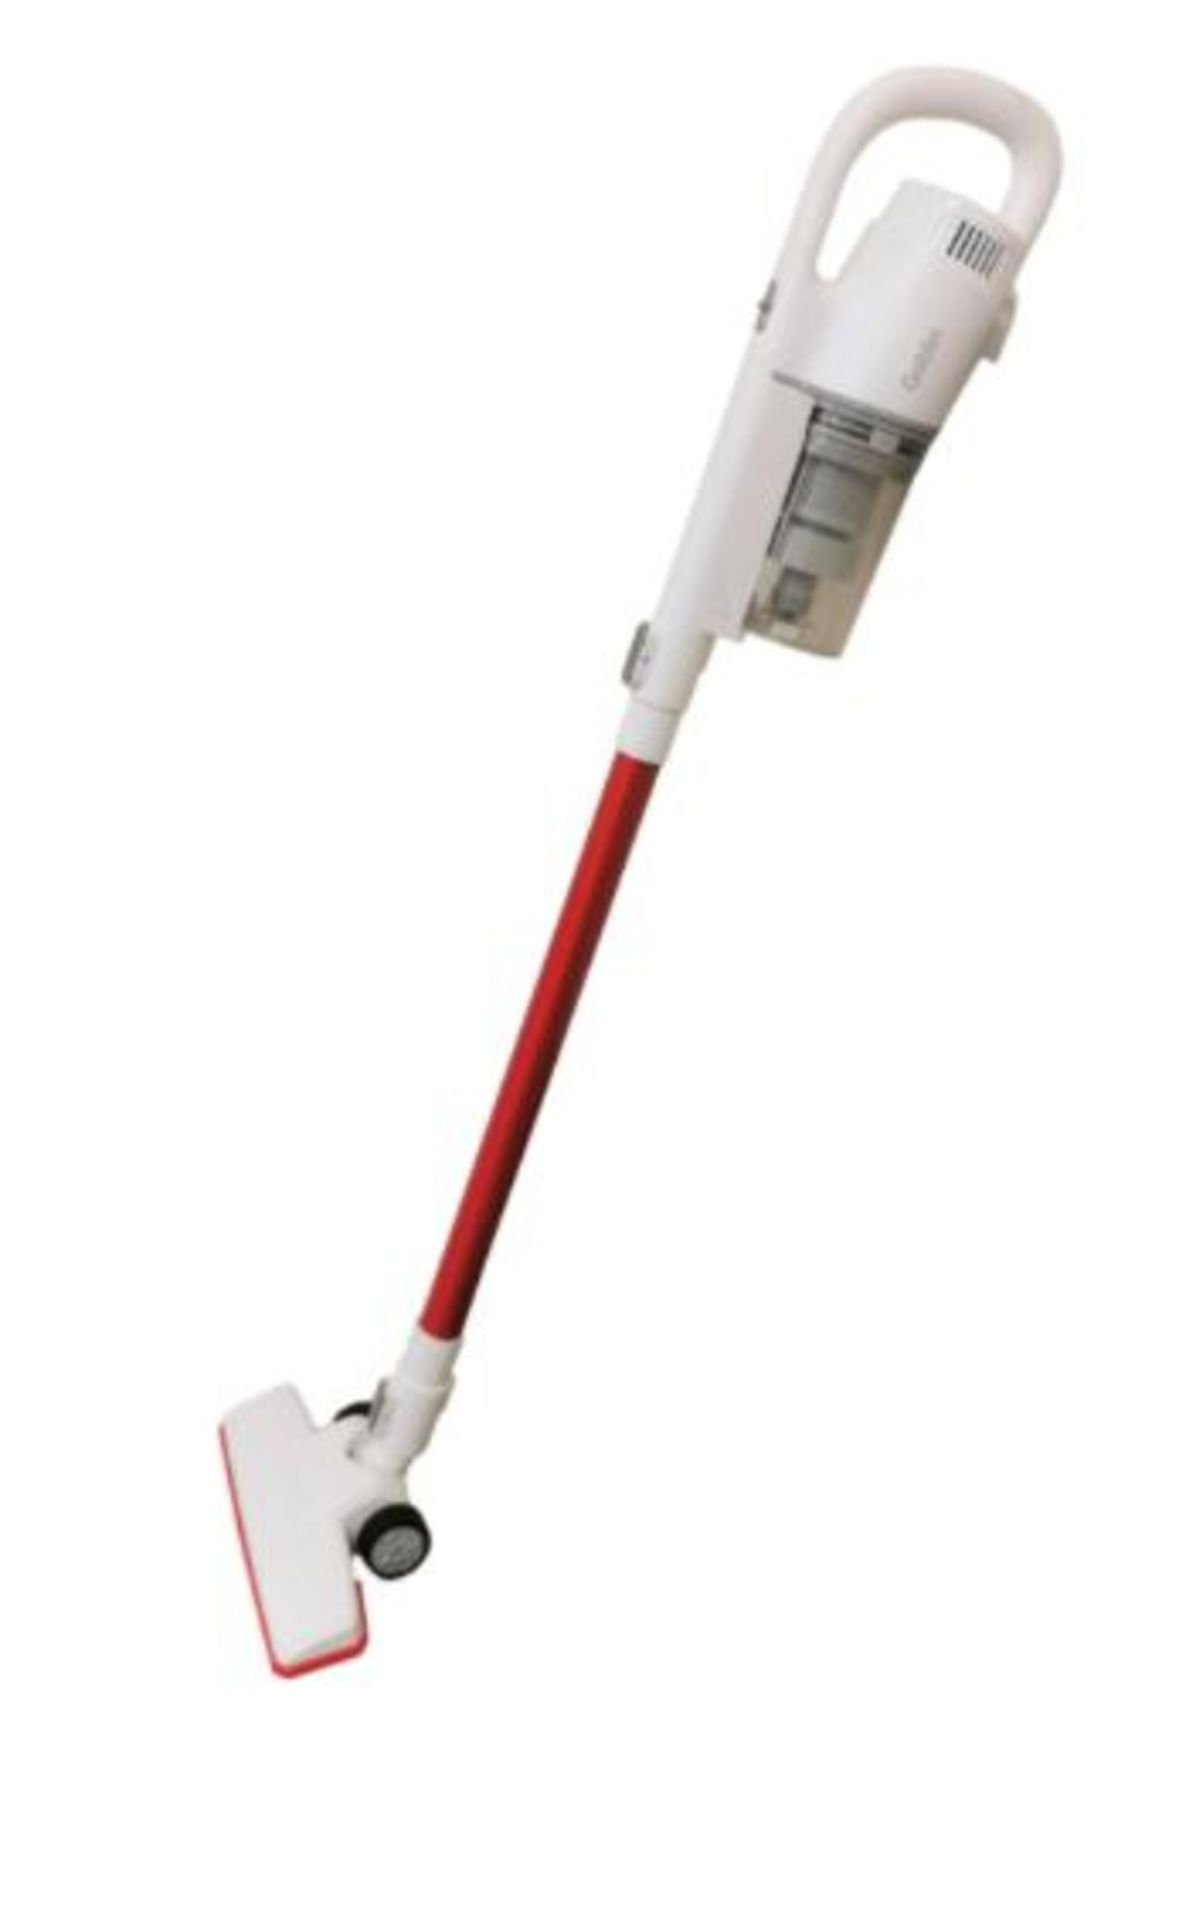 (15) 3x Vacuum Items. 2x Goblin Corded Stick Vacuum Cleaner. 1x Beldray Multi Cyclonic System.